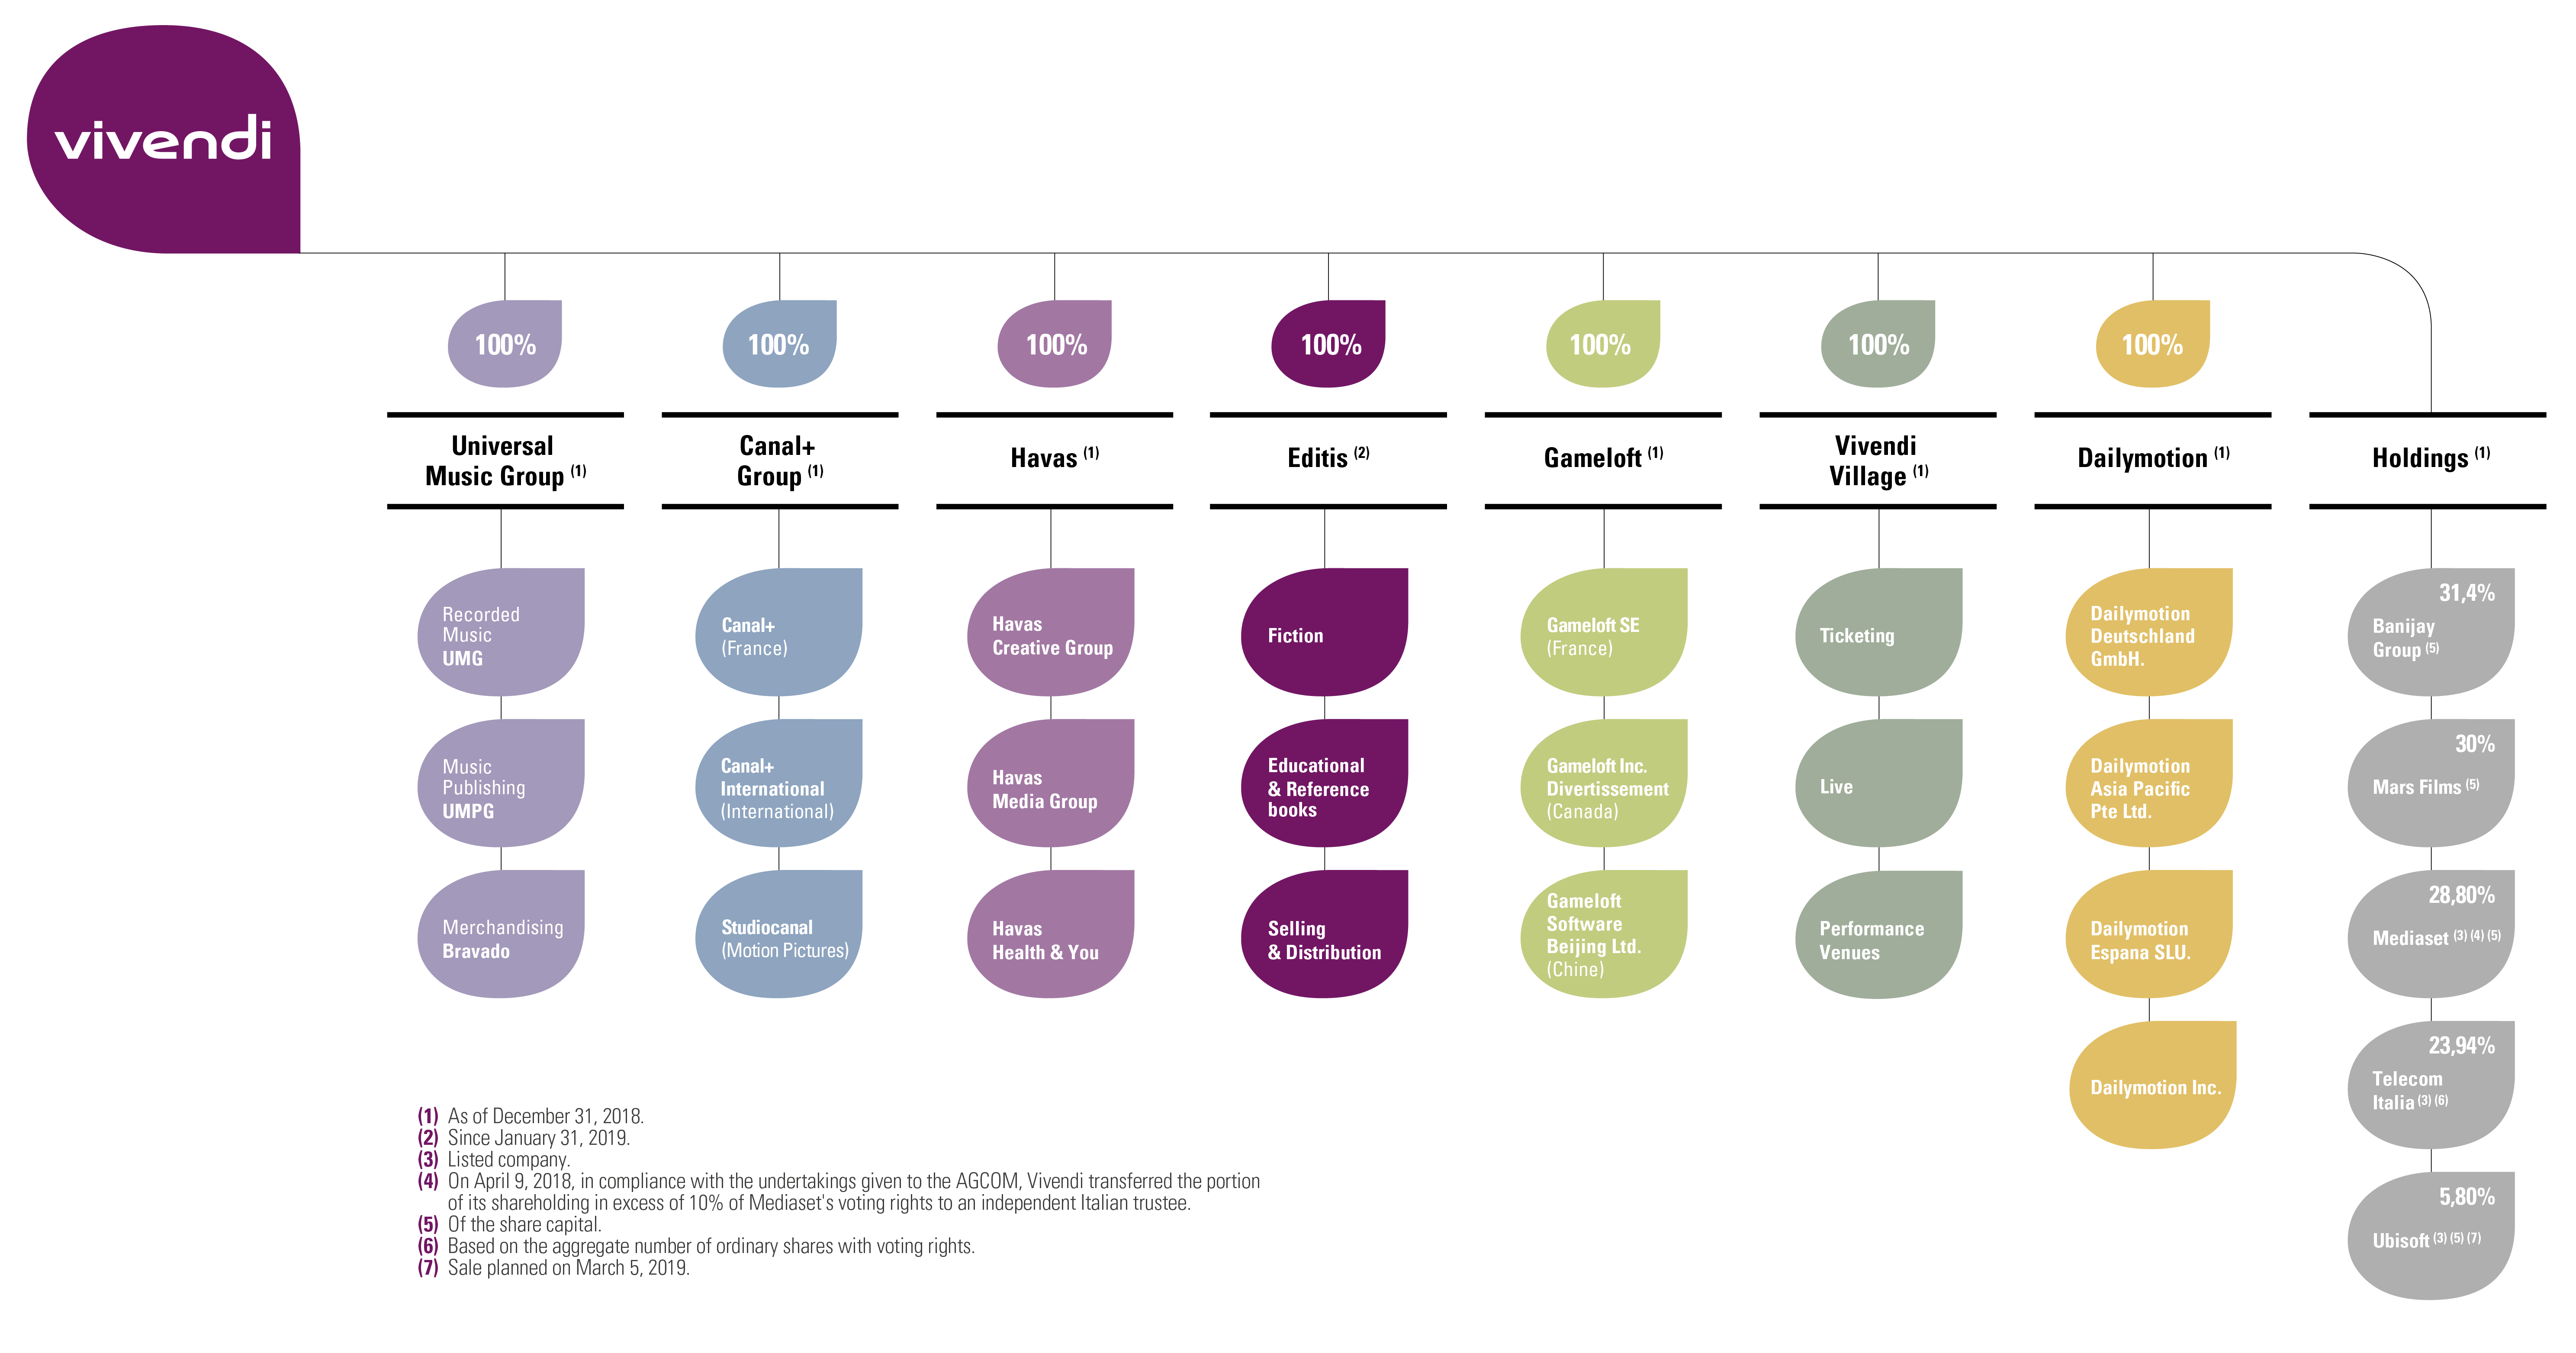 Organizational Chart For Publishing Company